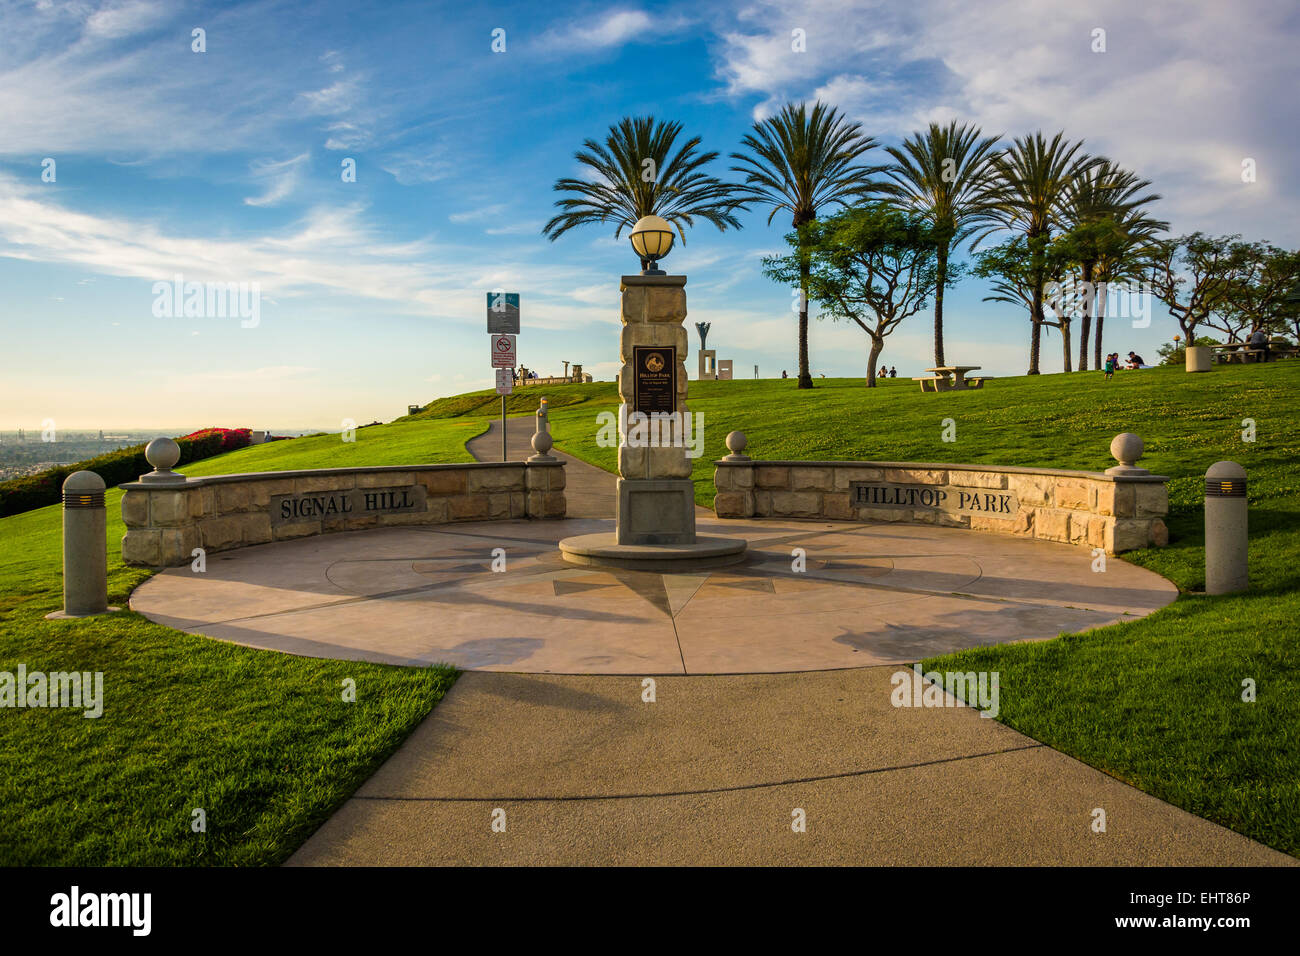 Hilltop Park, in Signal Hill, Long Beach, California. Stock Photo